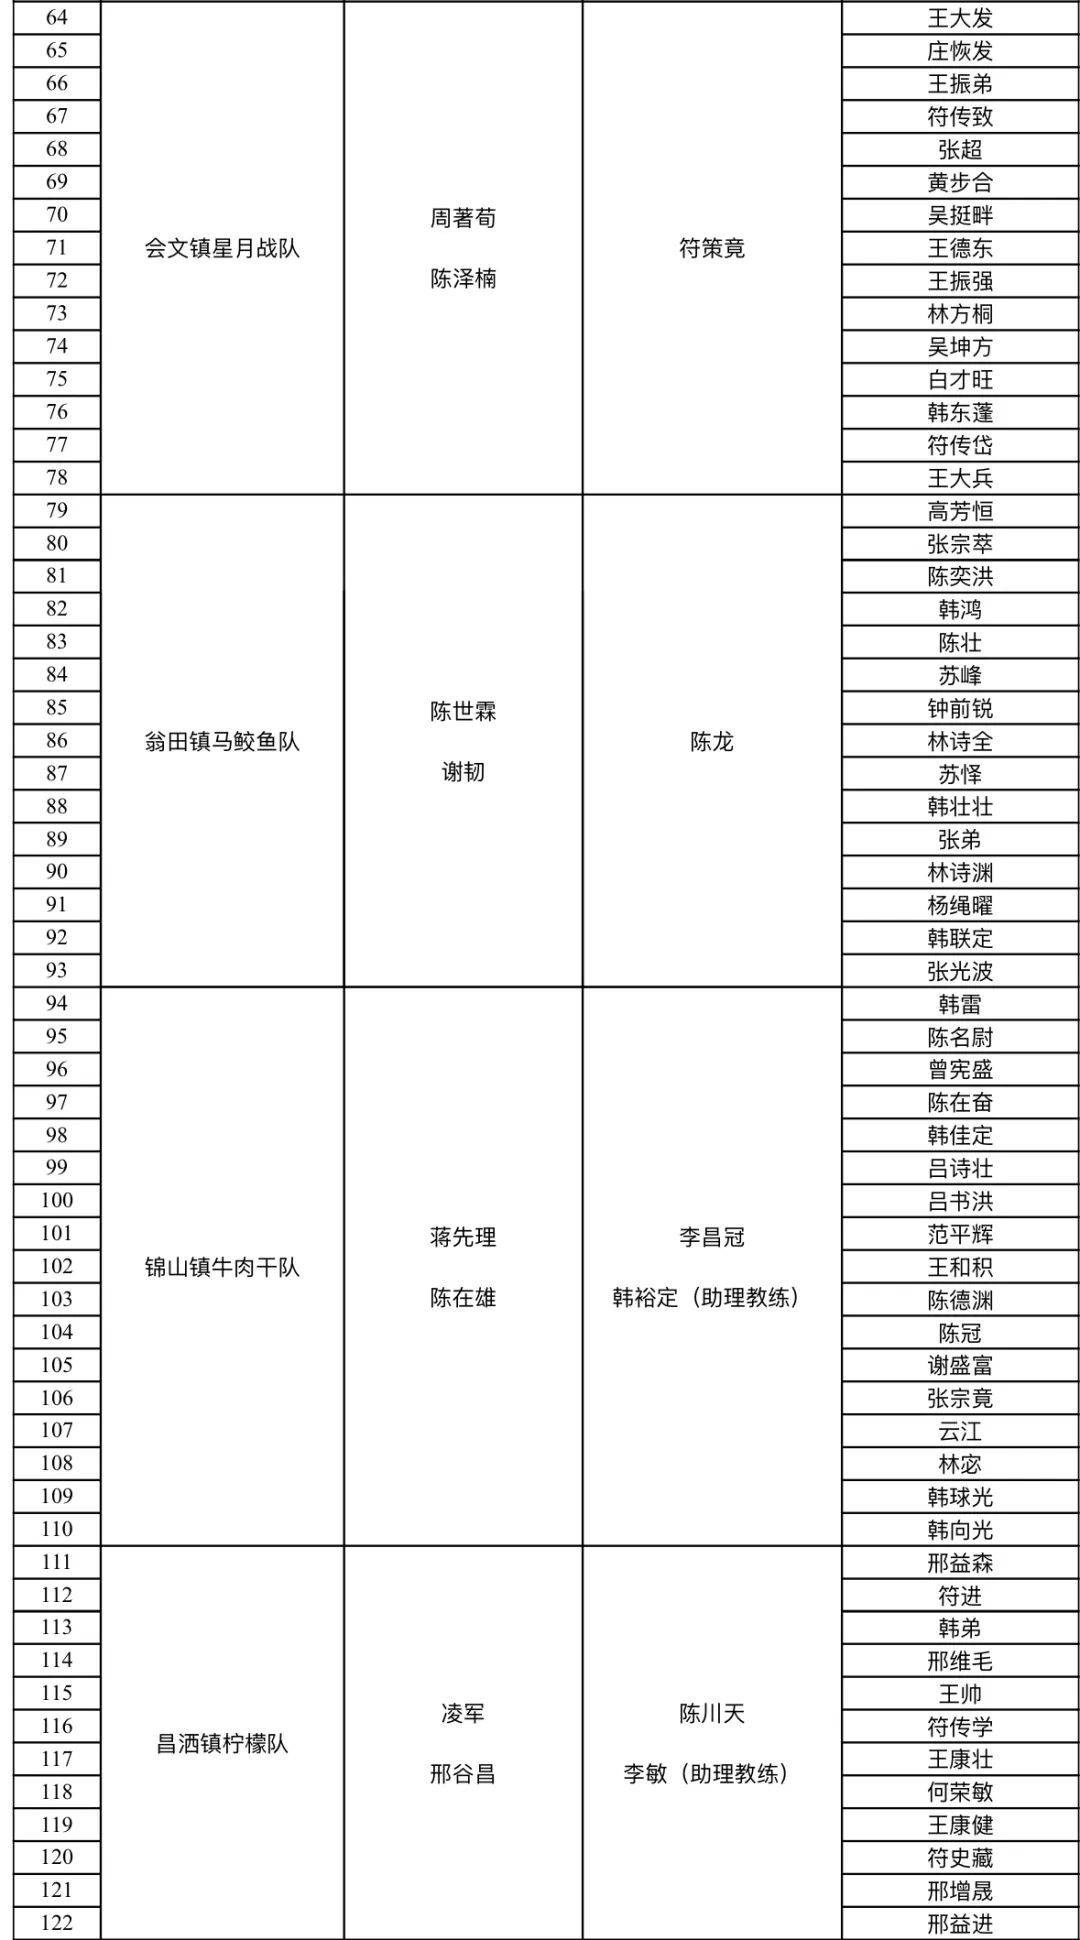 进贤县乡镇书记名单图片